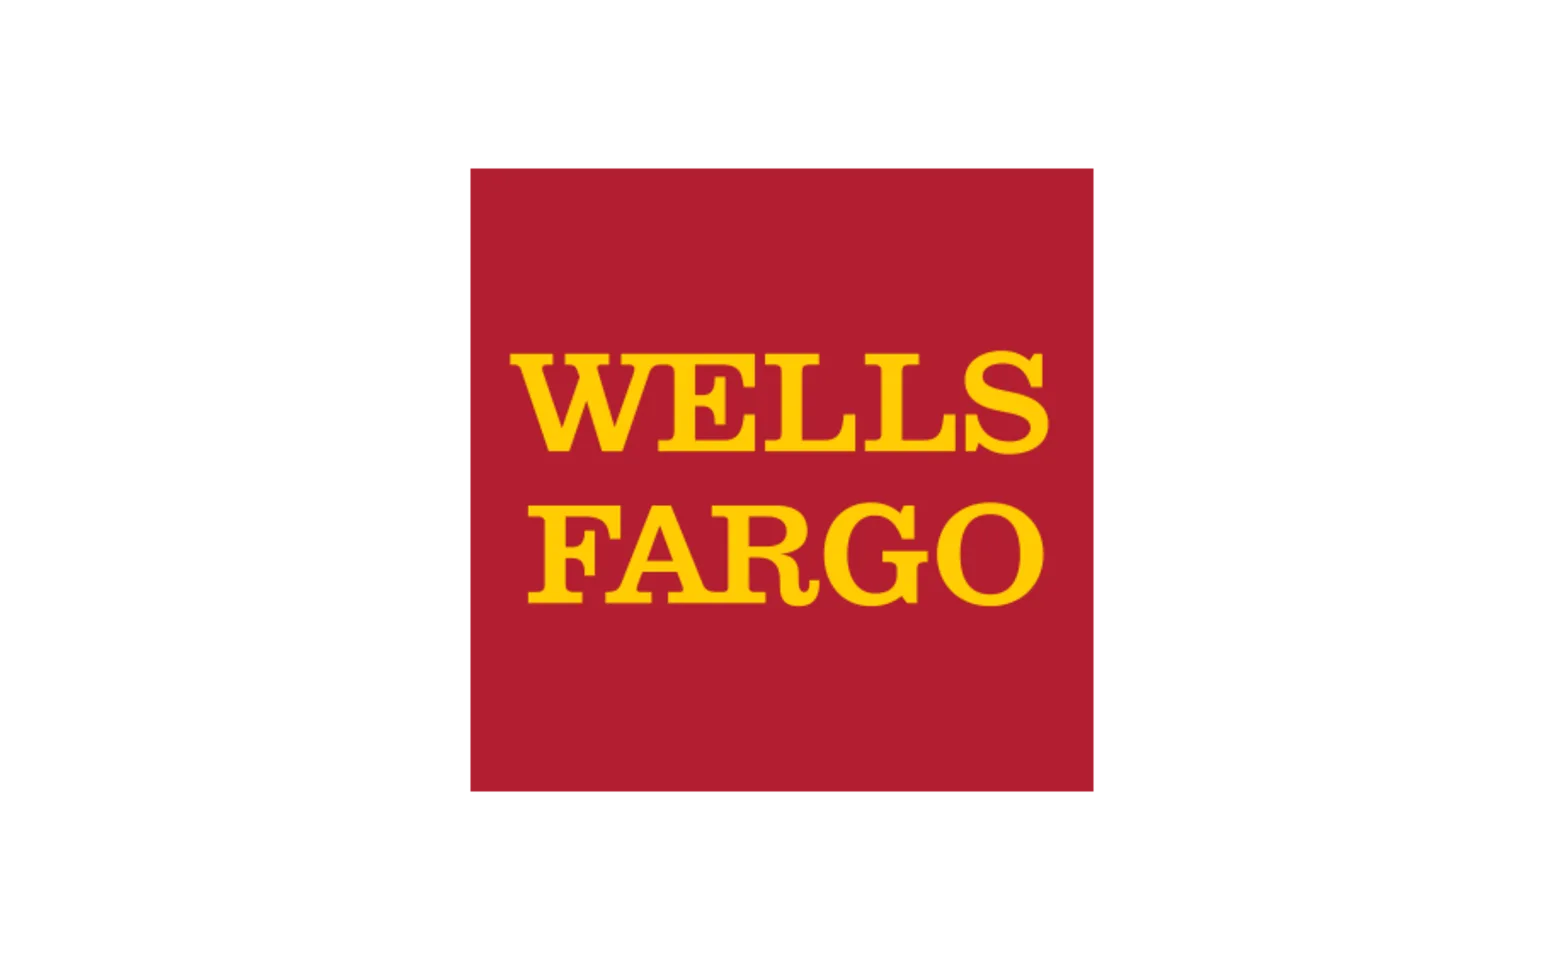 The Wells Fargo logo